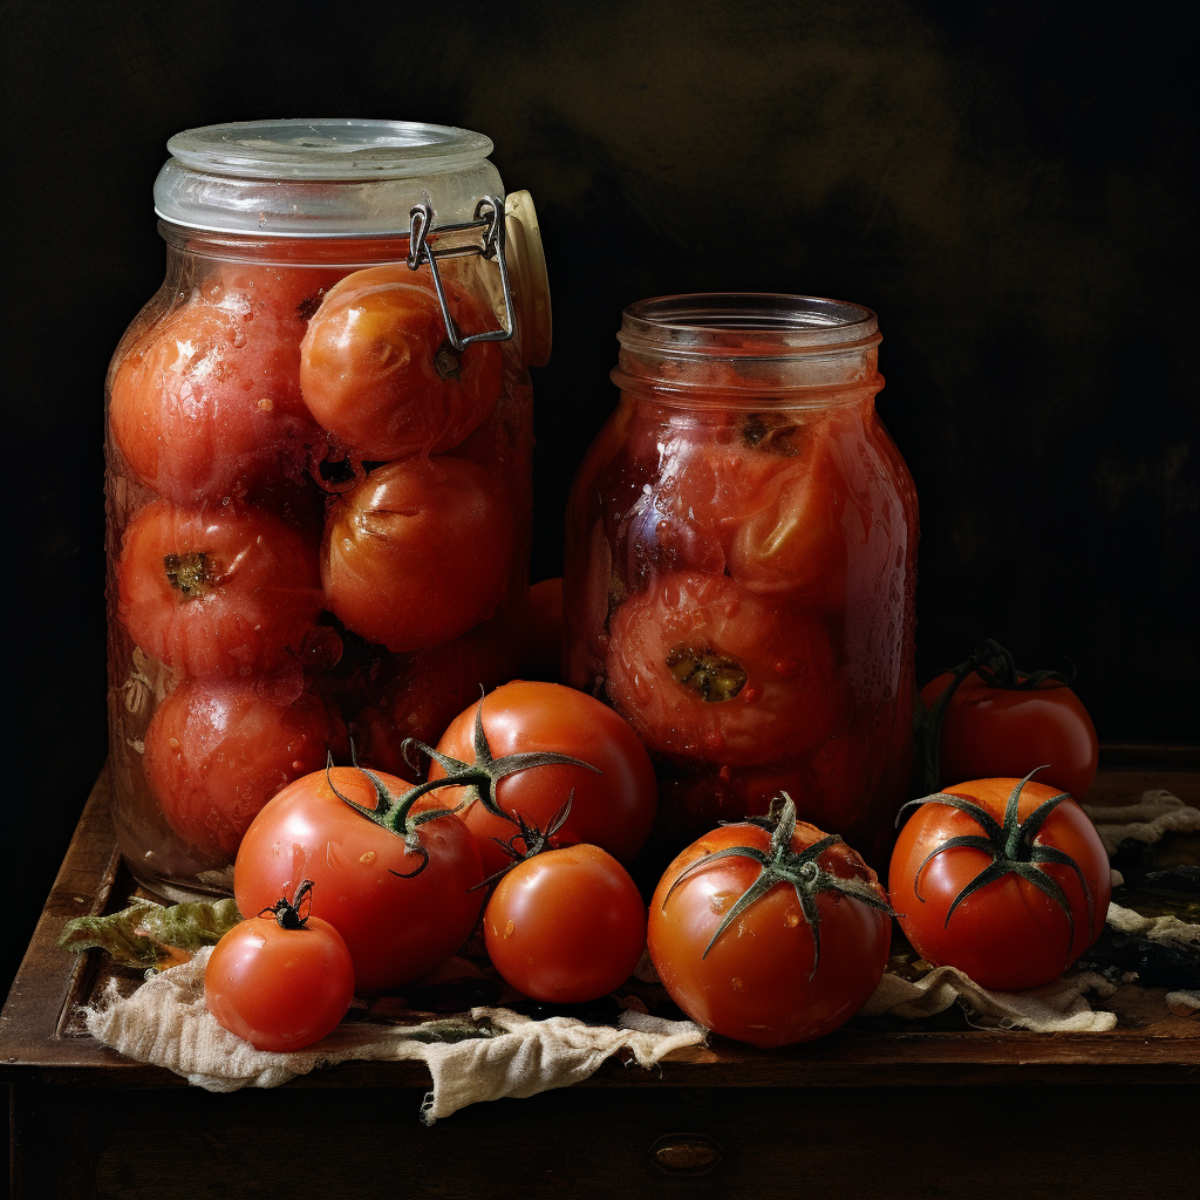 Soft Mushy tomatoes.